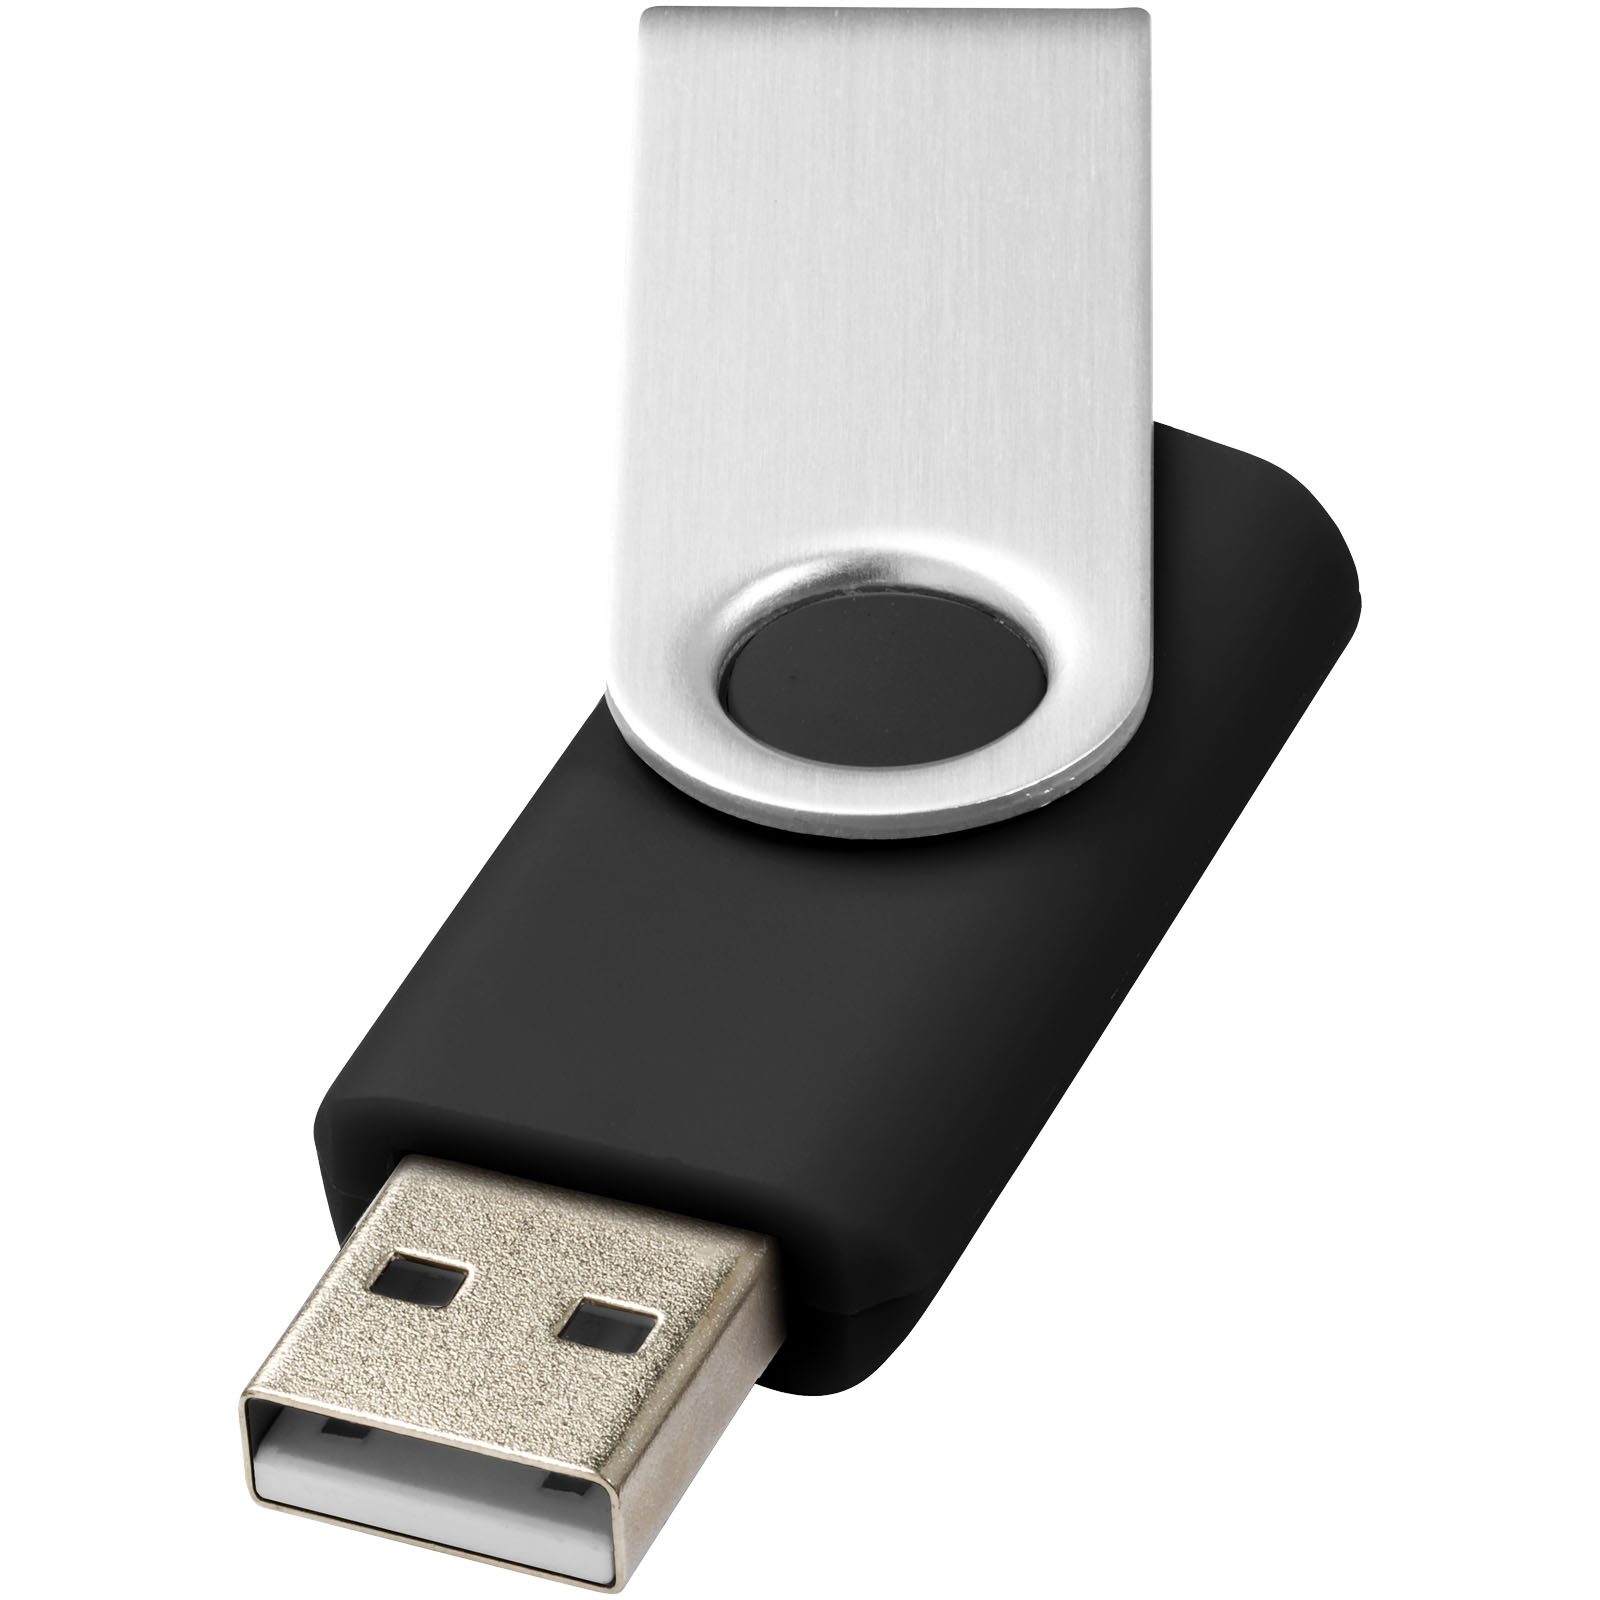 Chiavetta USB da 16GB - Atrani